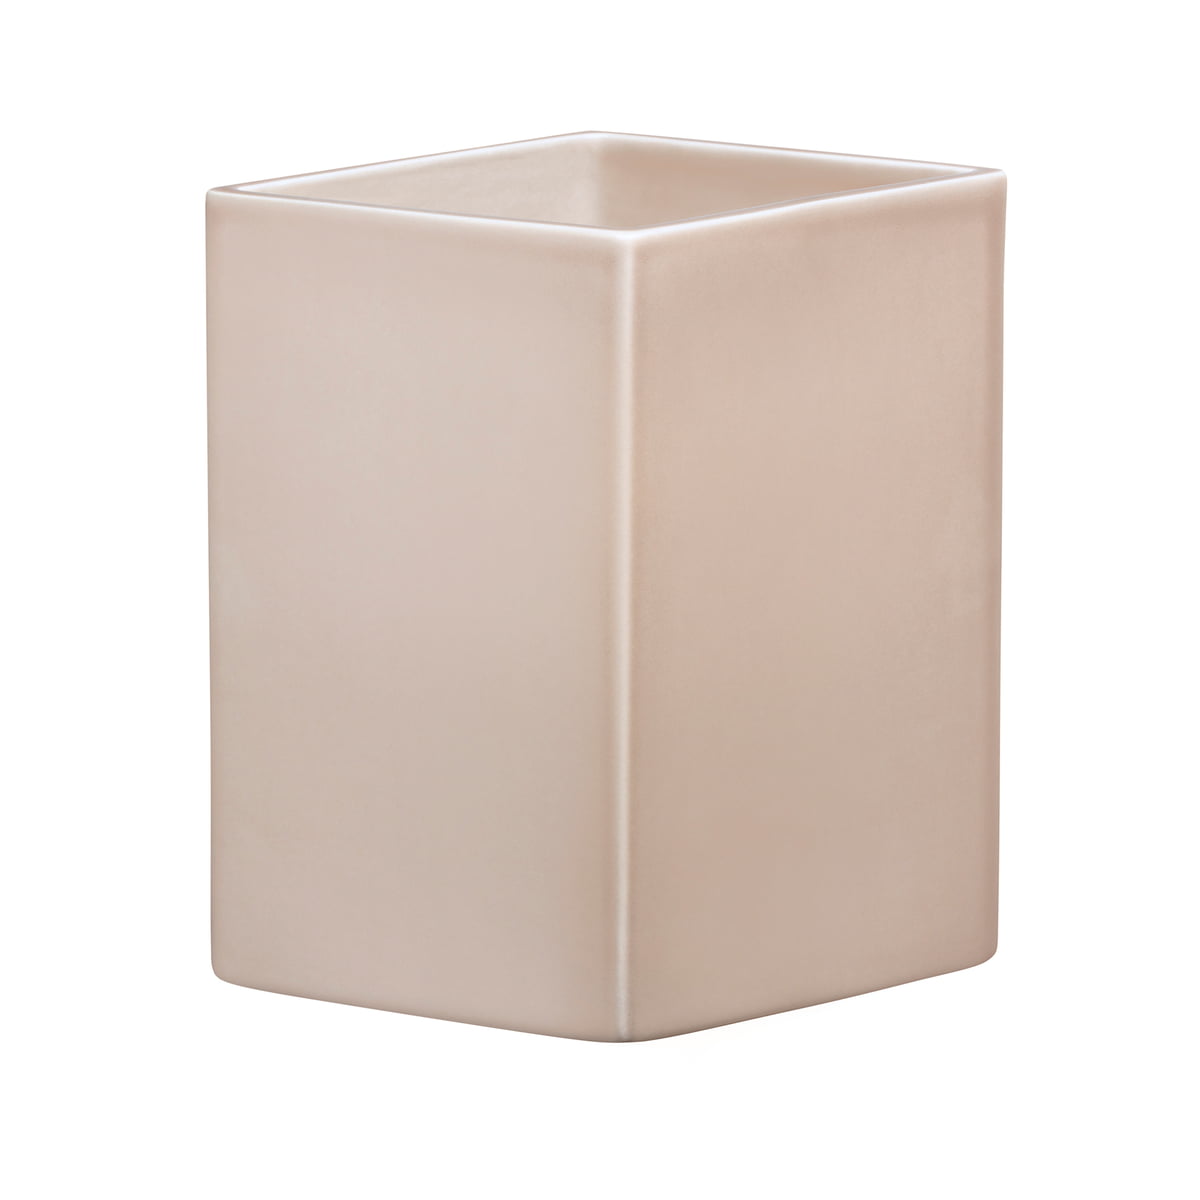 Iittala - Ruutu Keramik-Vase 225 mm, beige